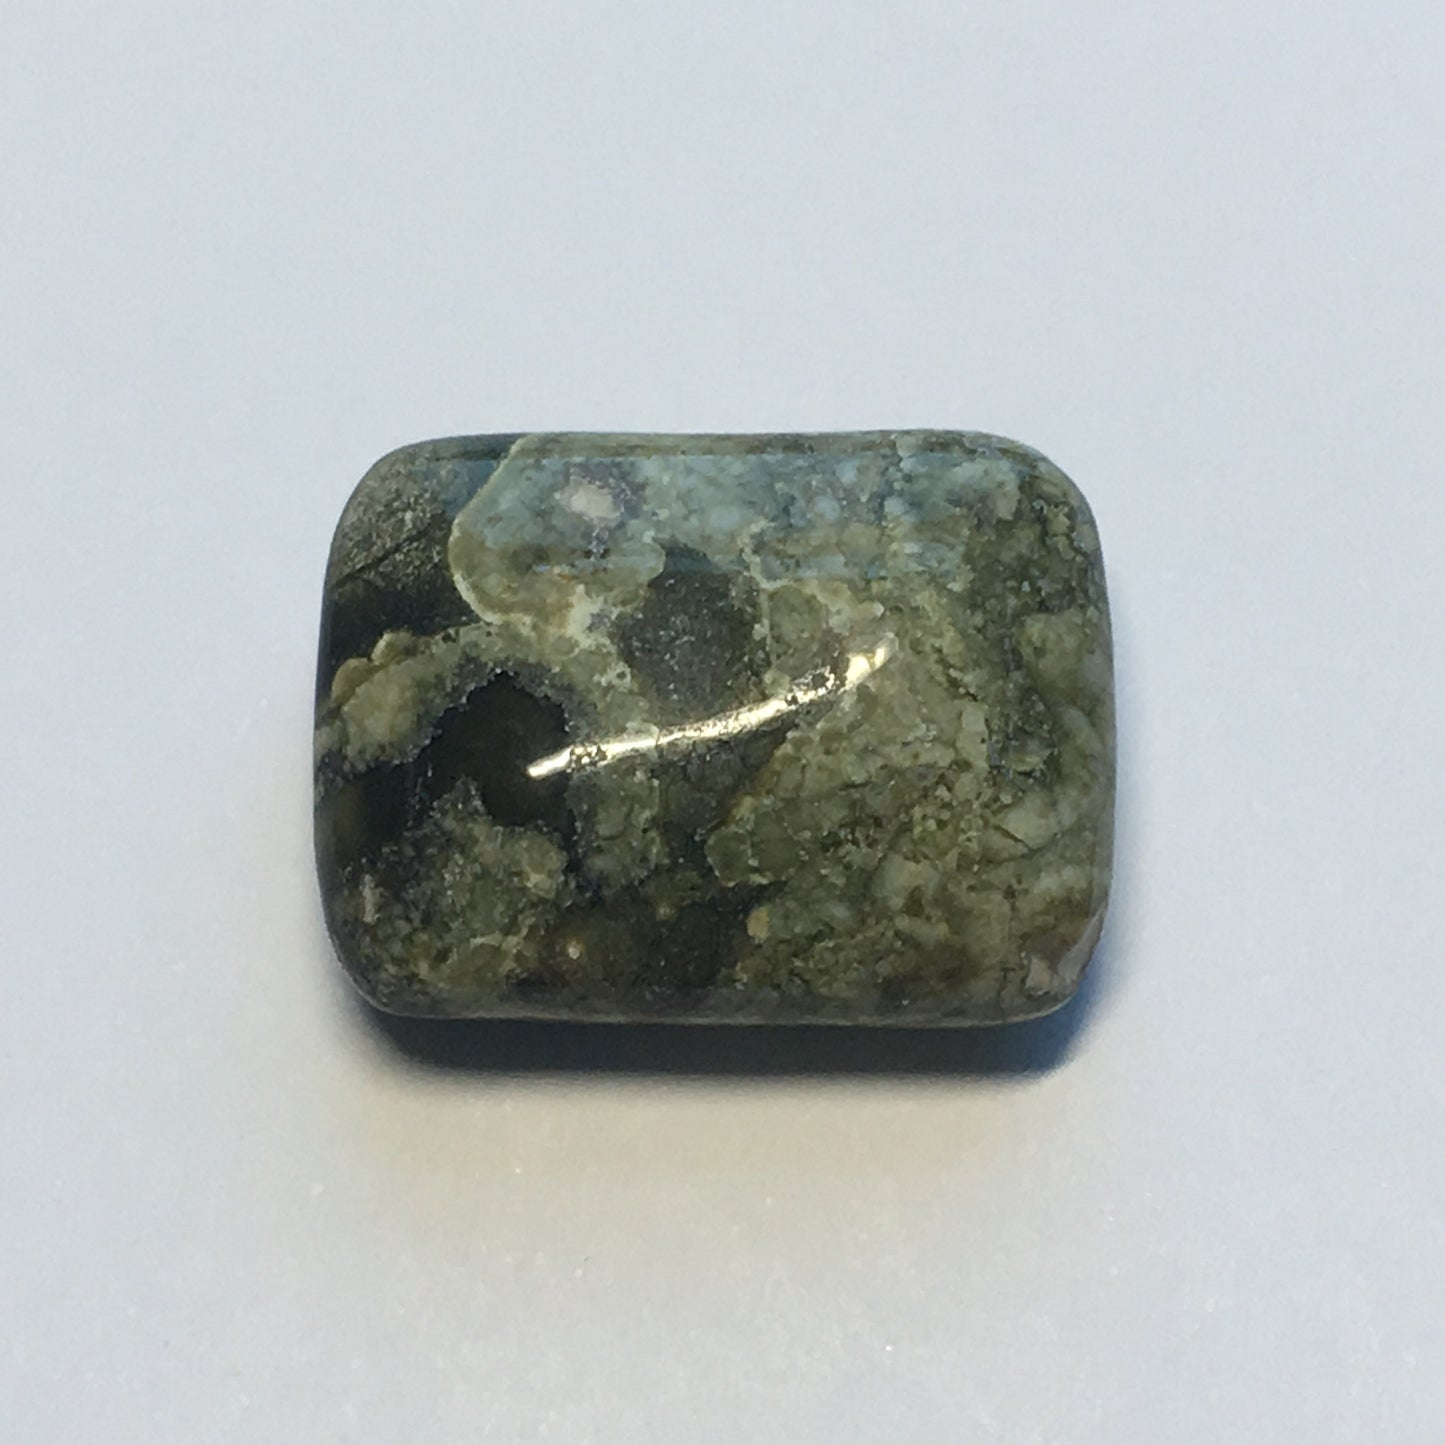 Olive Green Brecchiated Jasper Semi-Precious Stone Pillow Bead, Focal/Pendant, 20 x 15 x 8 mm